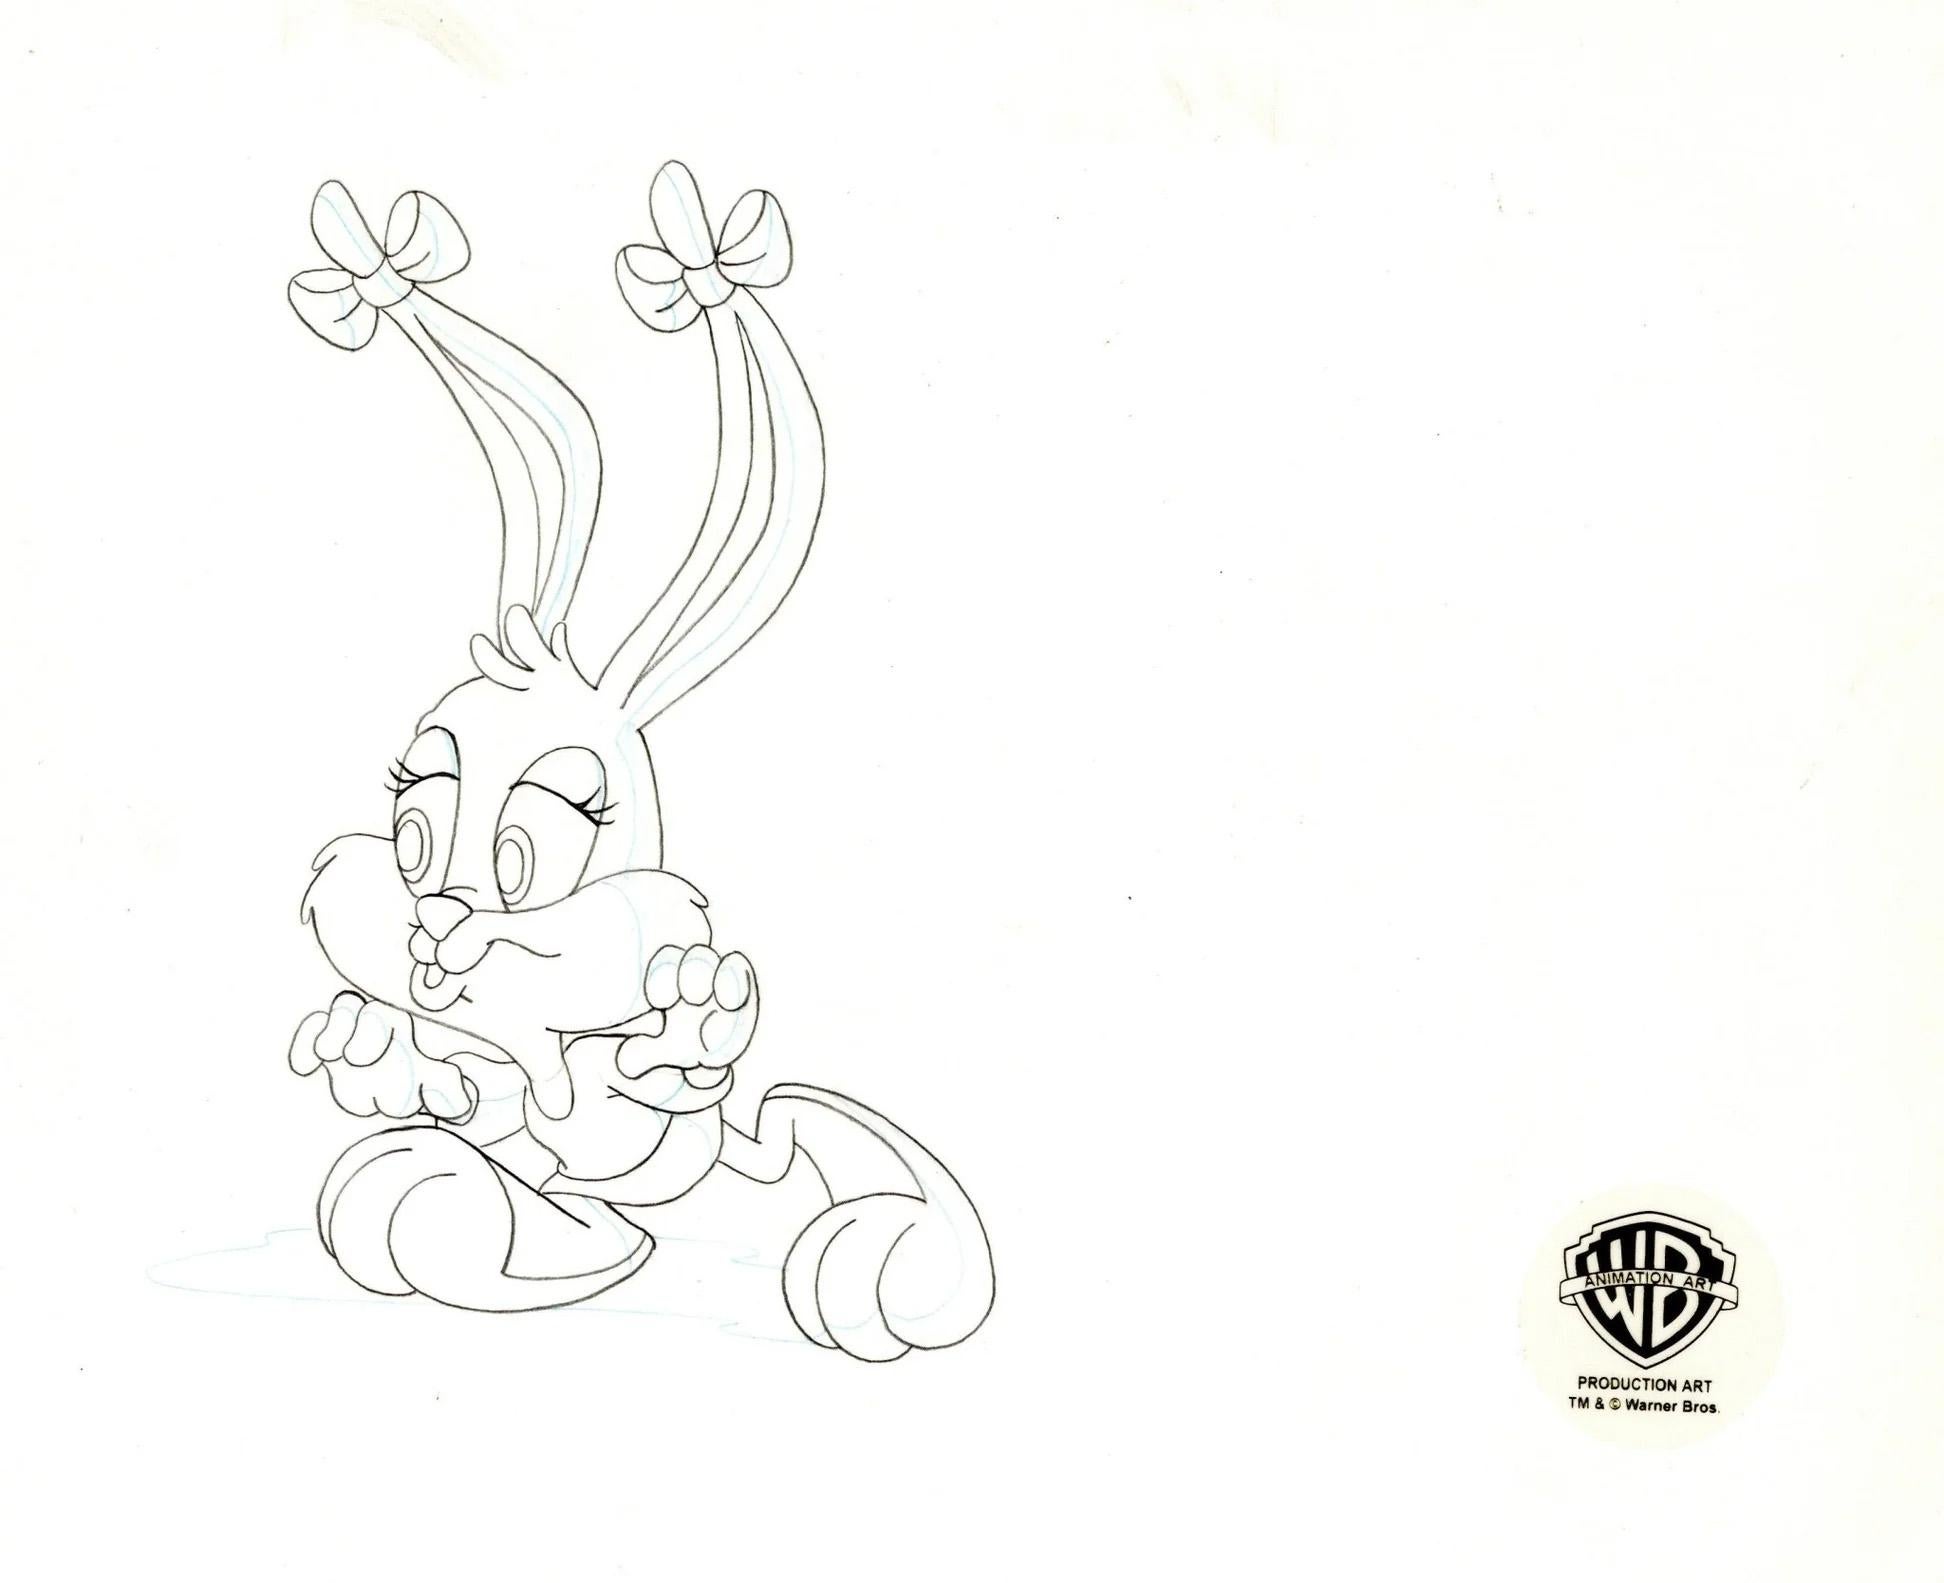 Tiny Toons Original Production Drawing: Babs Bunny - Art by Warner Bros. Studio Artists